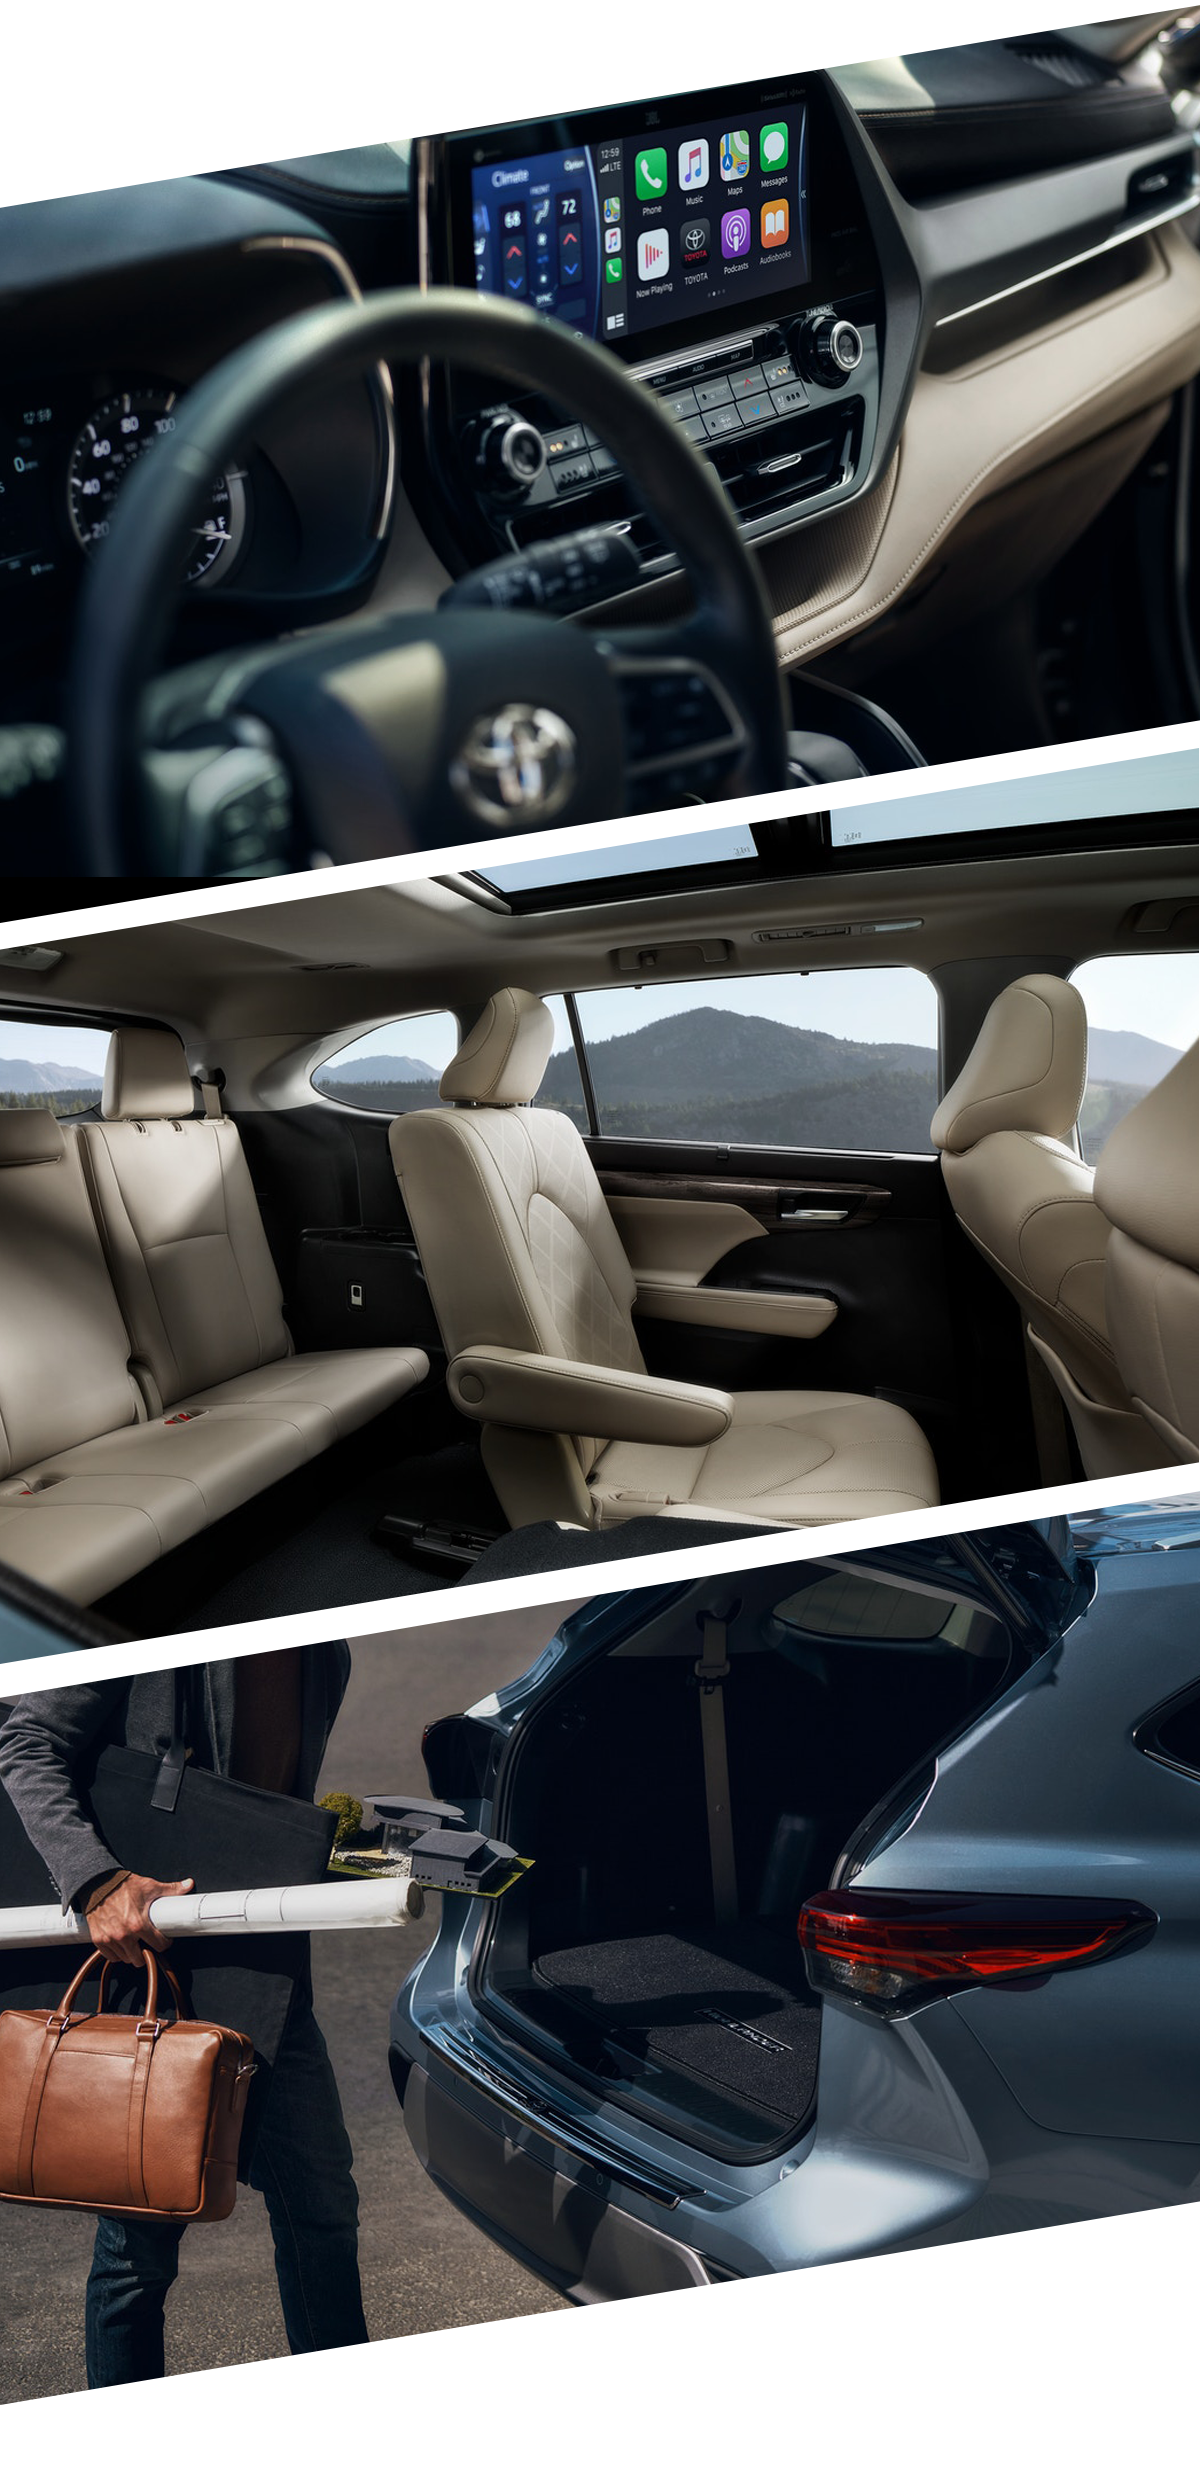 2021 Toyota Highlander Interior Images